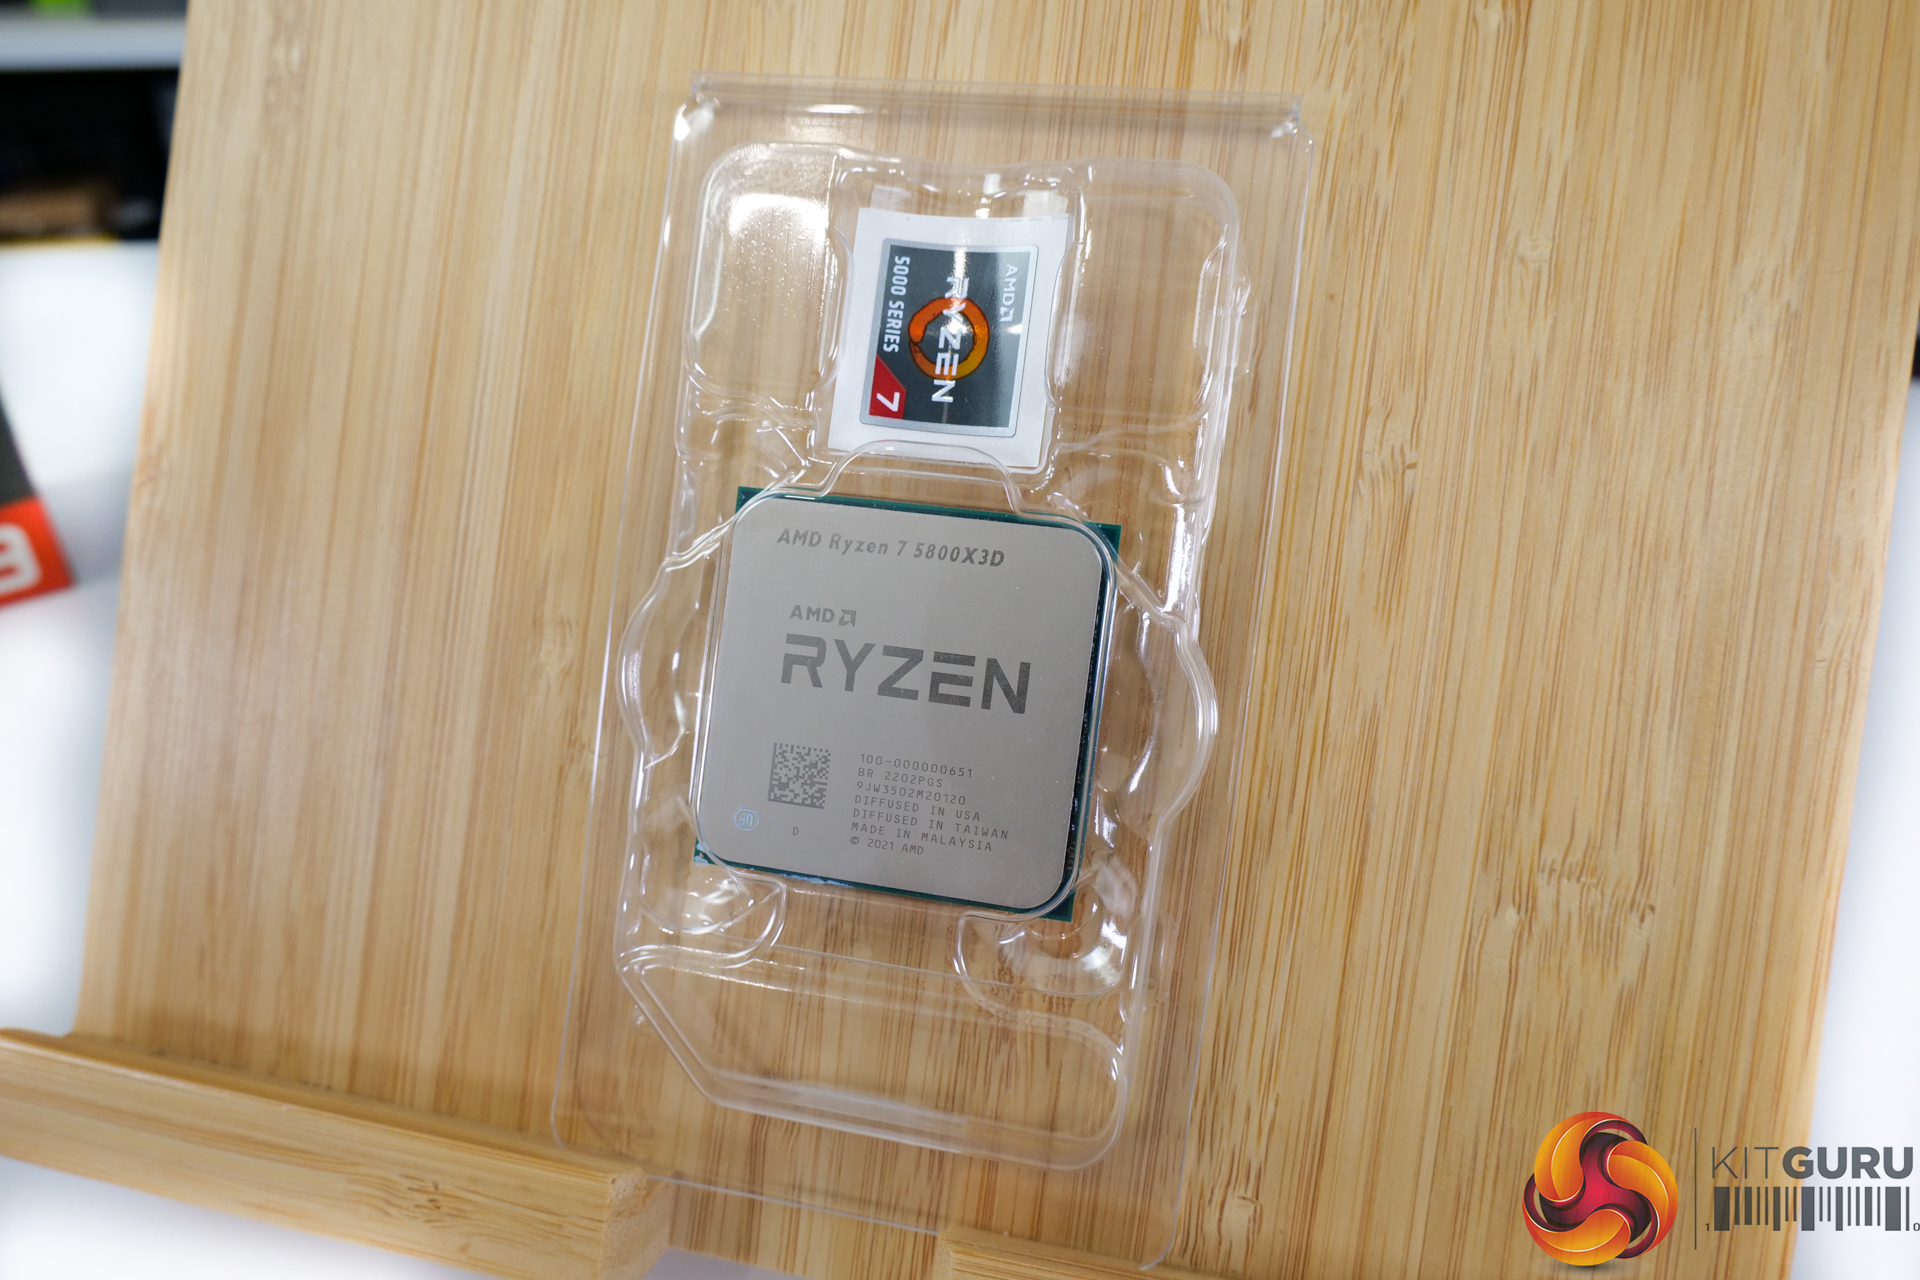 Ryzen 7 5800X3D review: Showing how far AMD's Ryzen has come